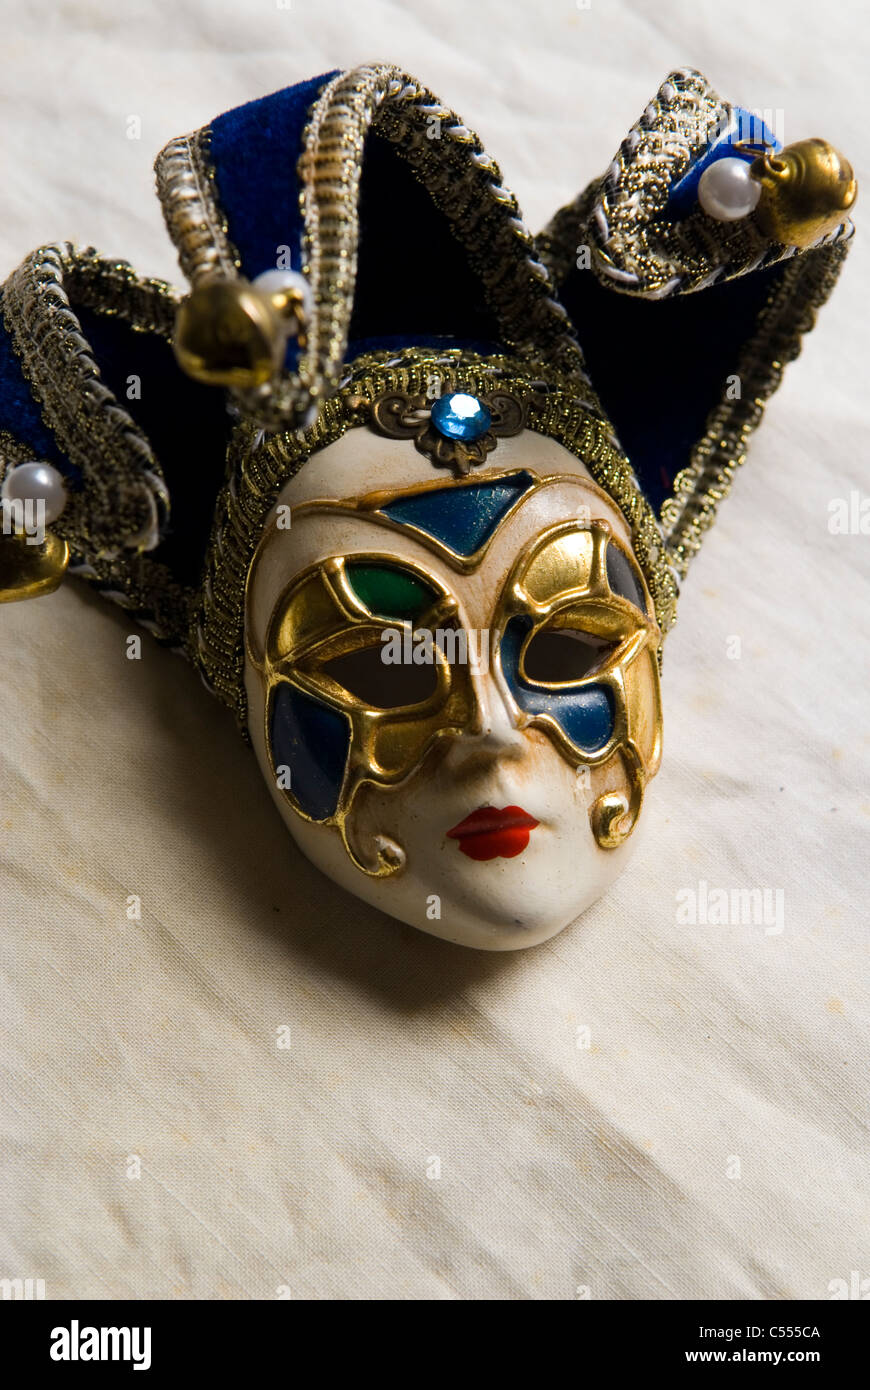 Vintage Venetian mask Stock Photo - Alamy